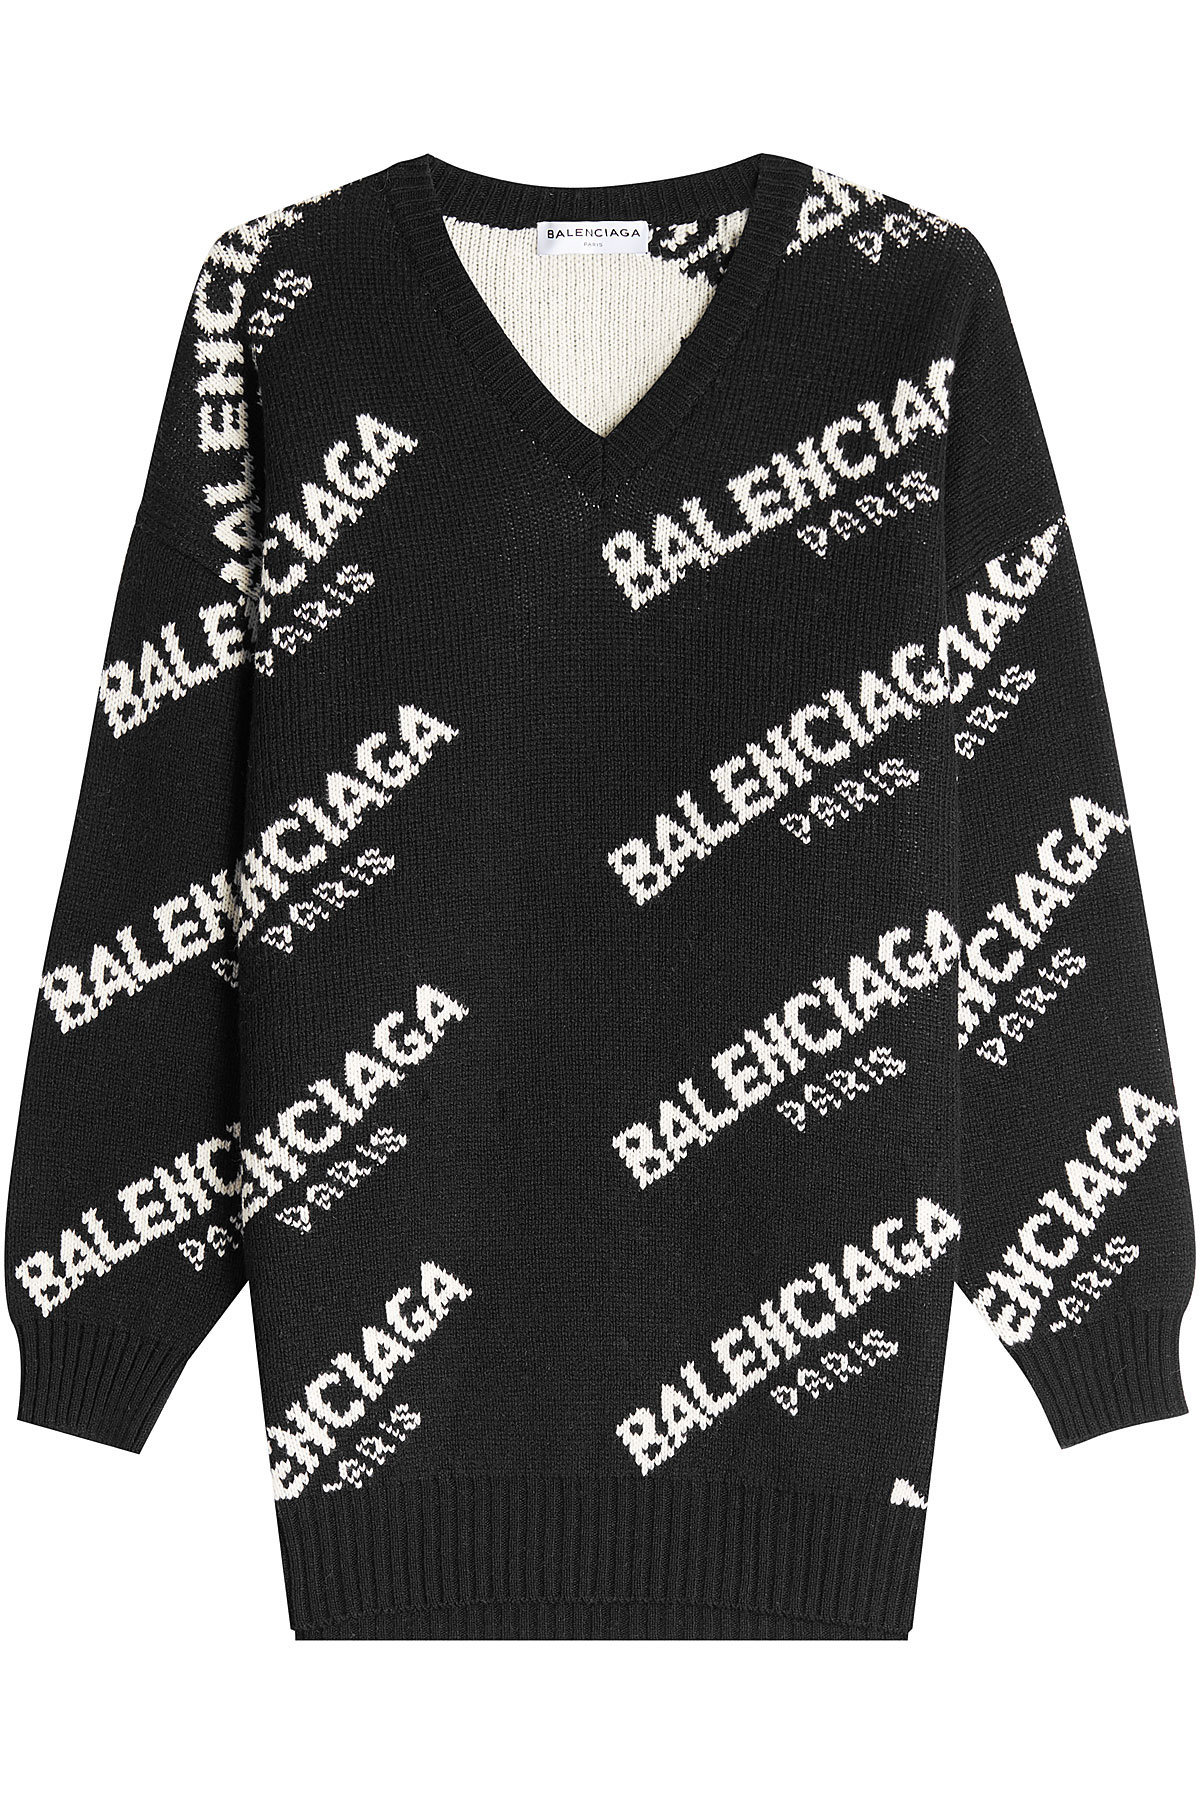 Balenciaga - Jacquard Logo Pullover with Virgin Wool and Camel